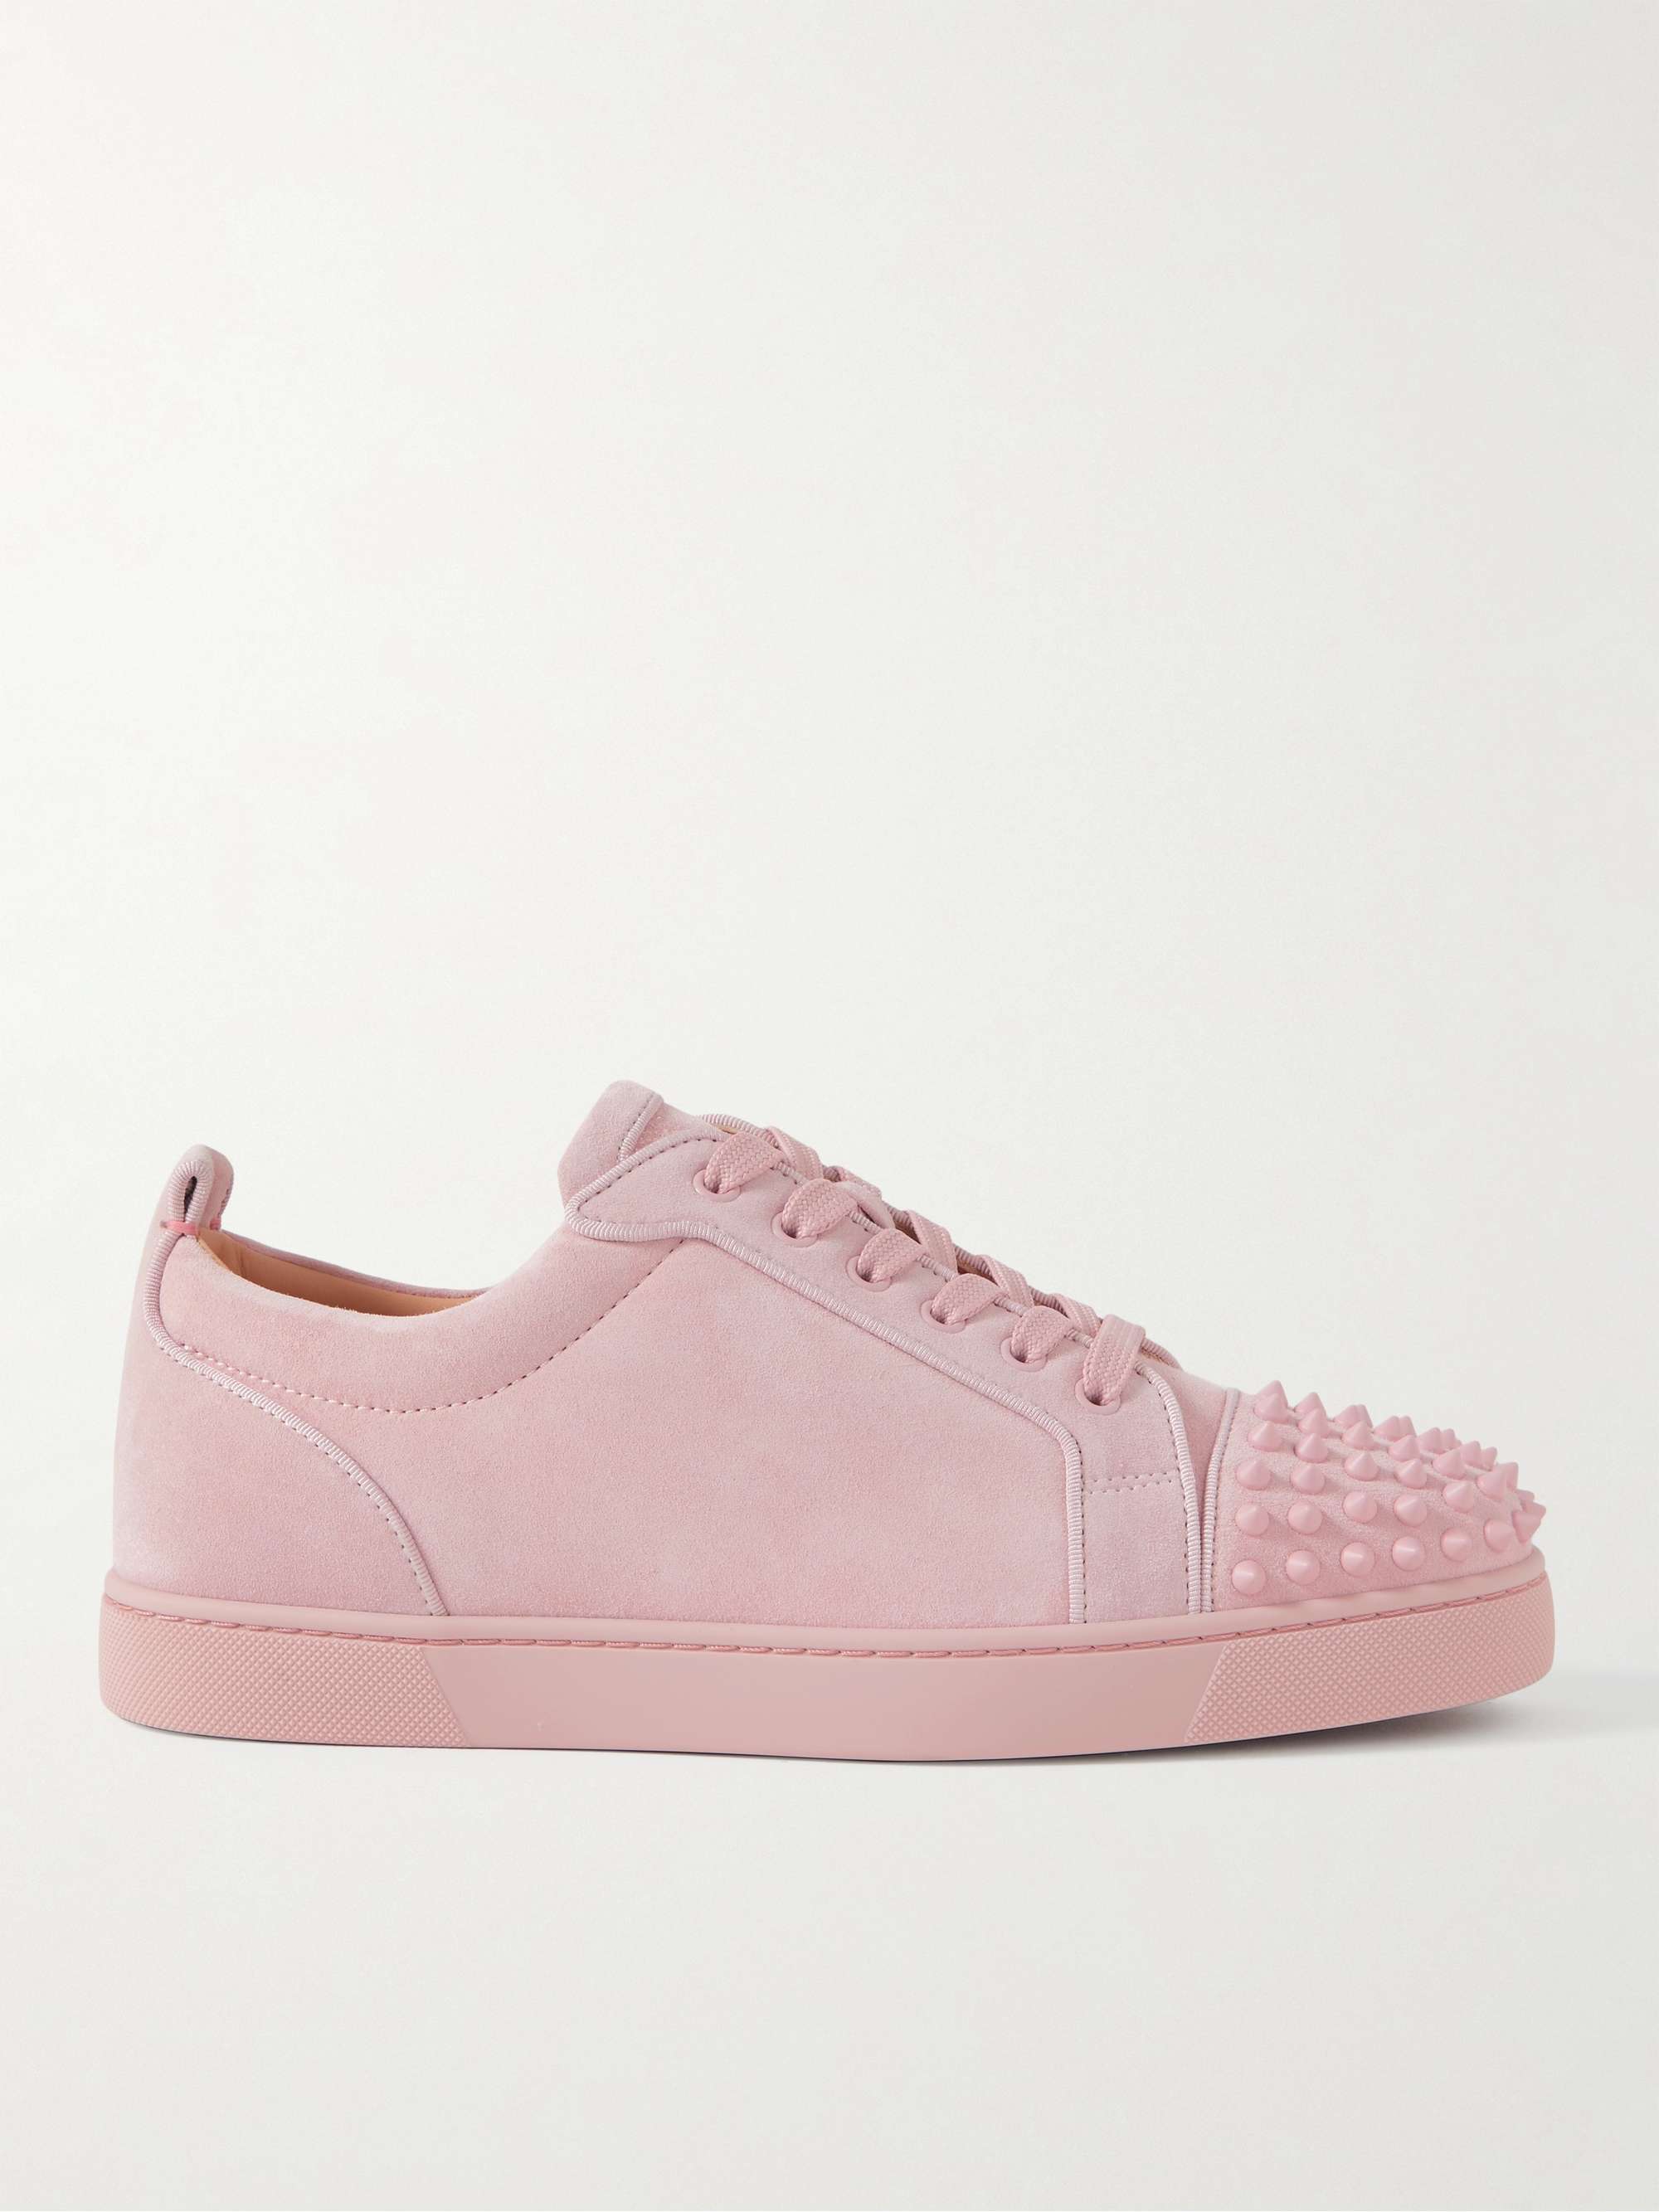 Christian Louboutin Louis Junior Spikes Cap-Toe Suede Sneakers - Men - Pink Suede Shoes - EU 44.5